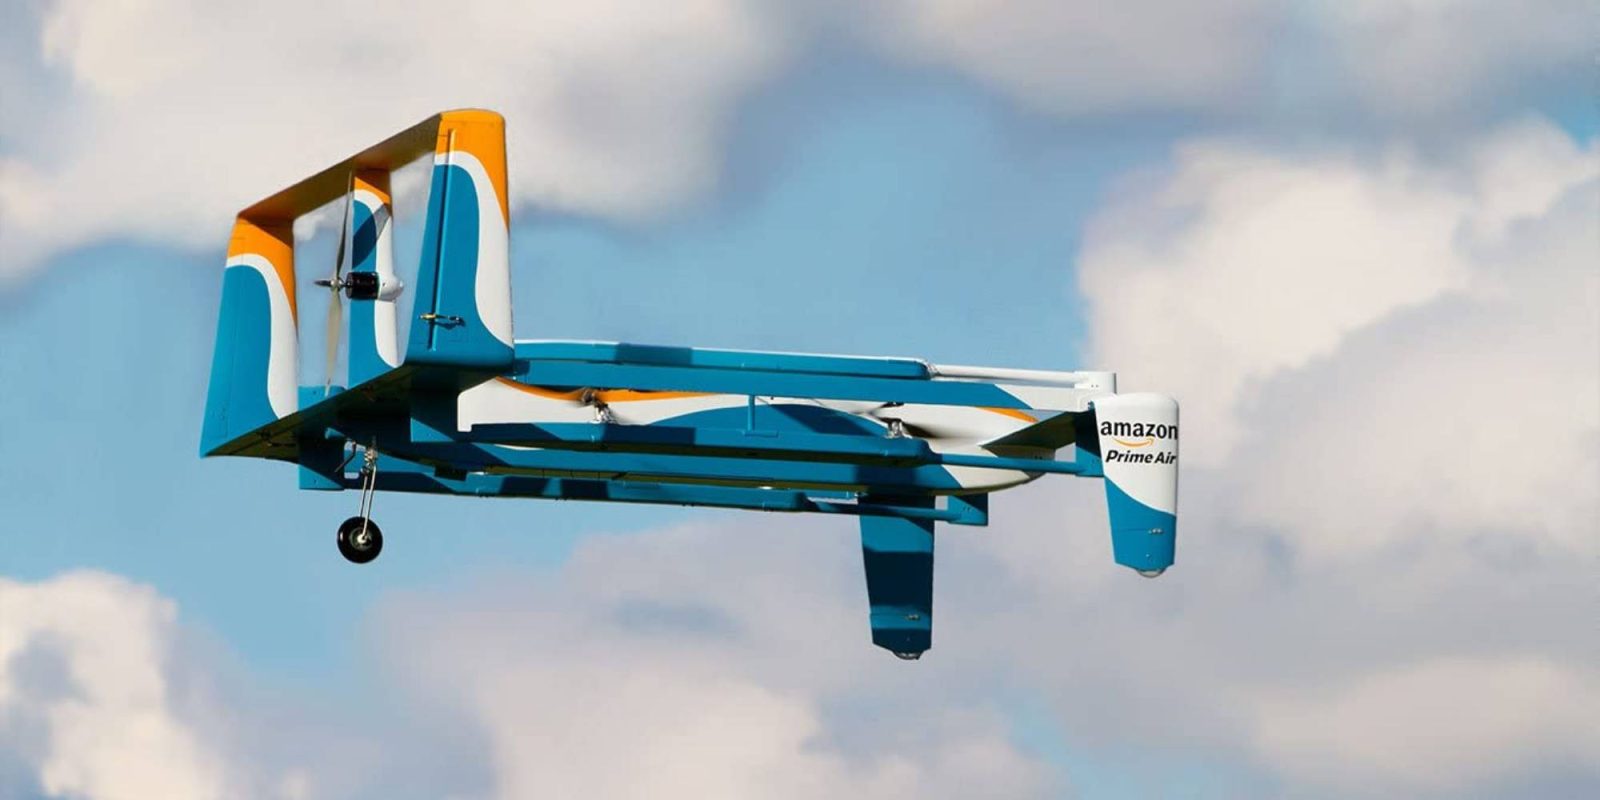 Amazon drone ski lifts